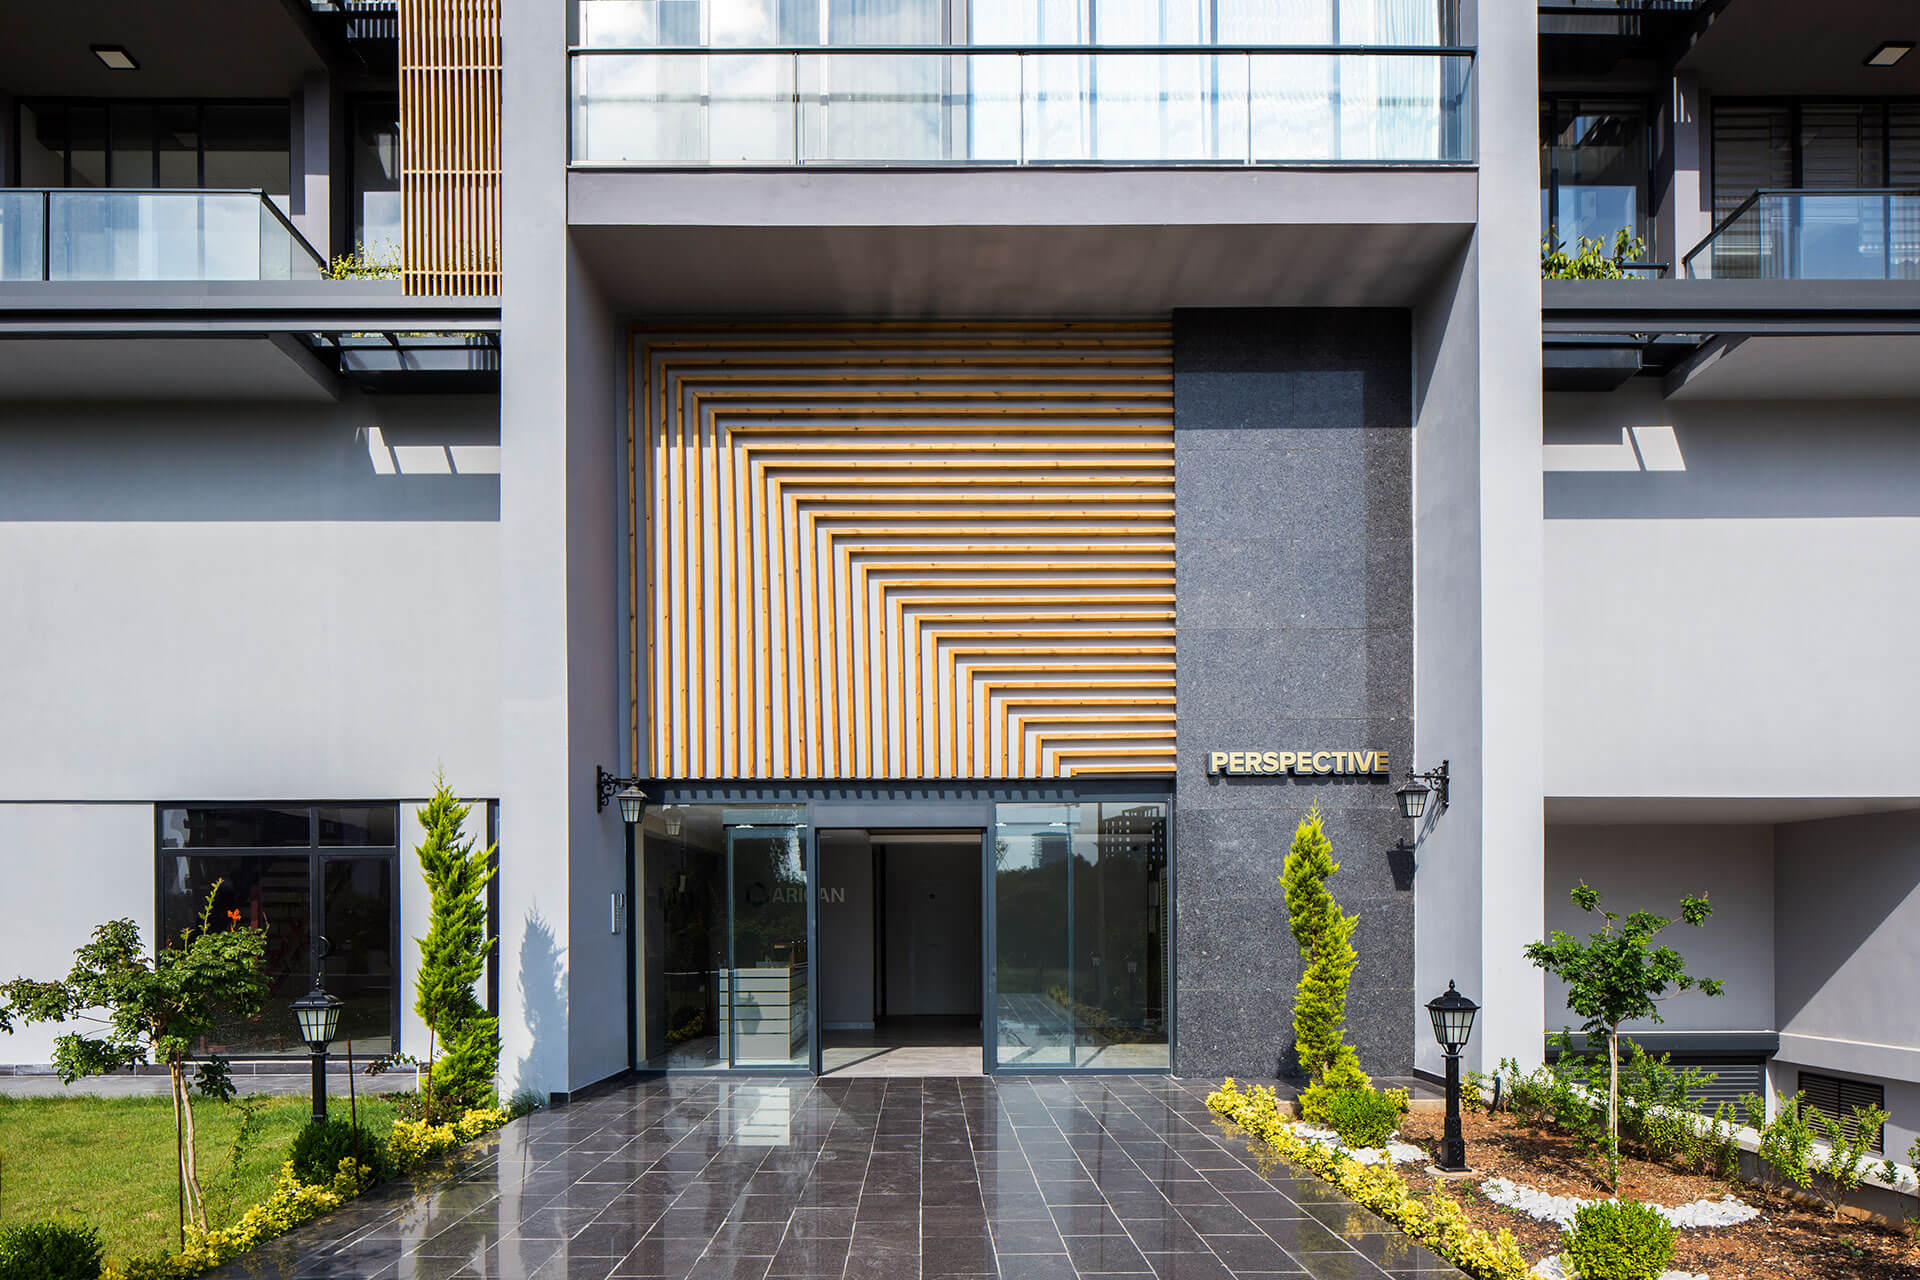 İpek Baycan Architects - Perspective Offices - Entrance / Landscape Design